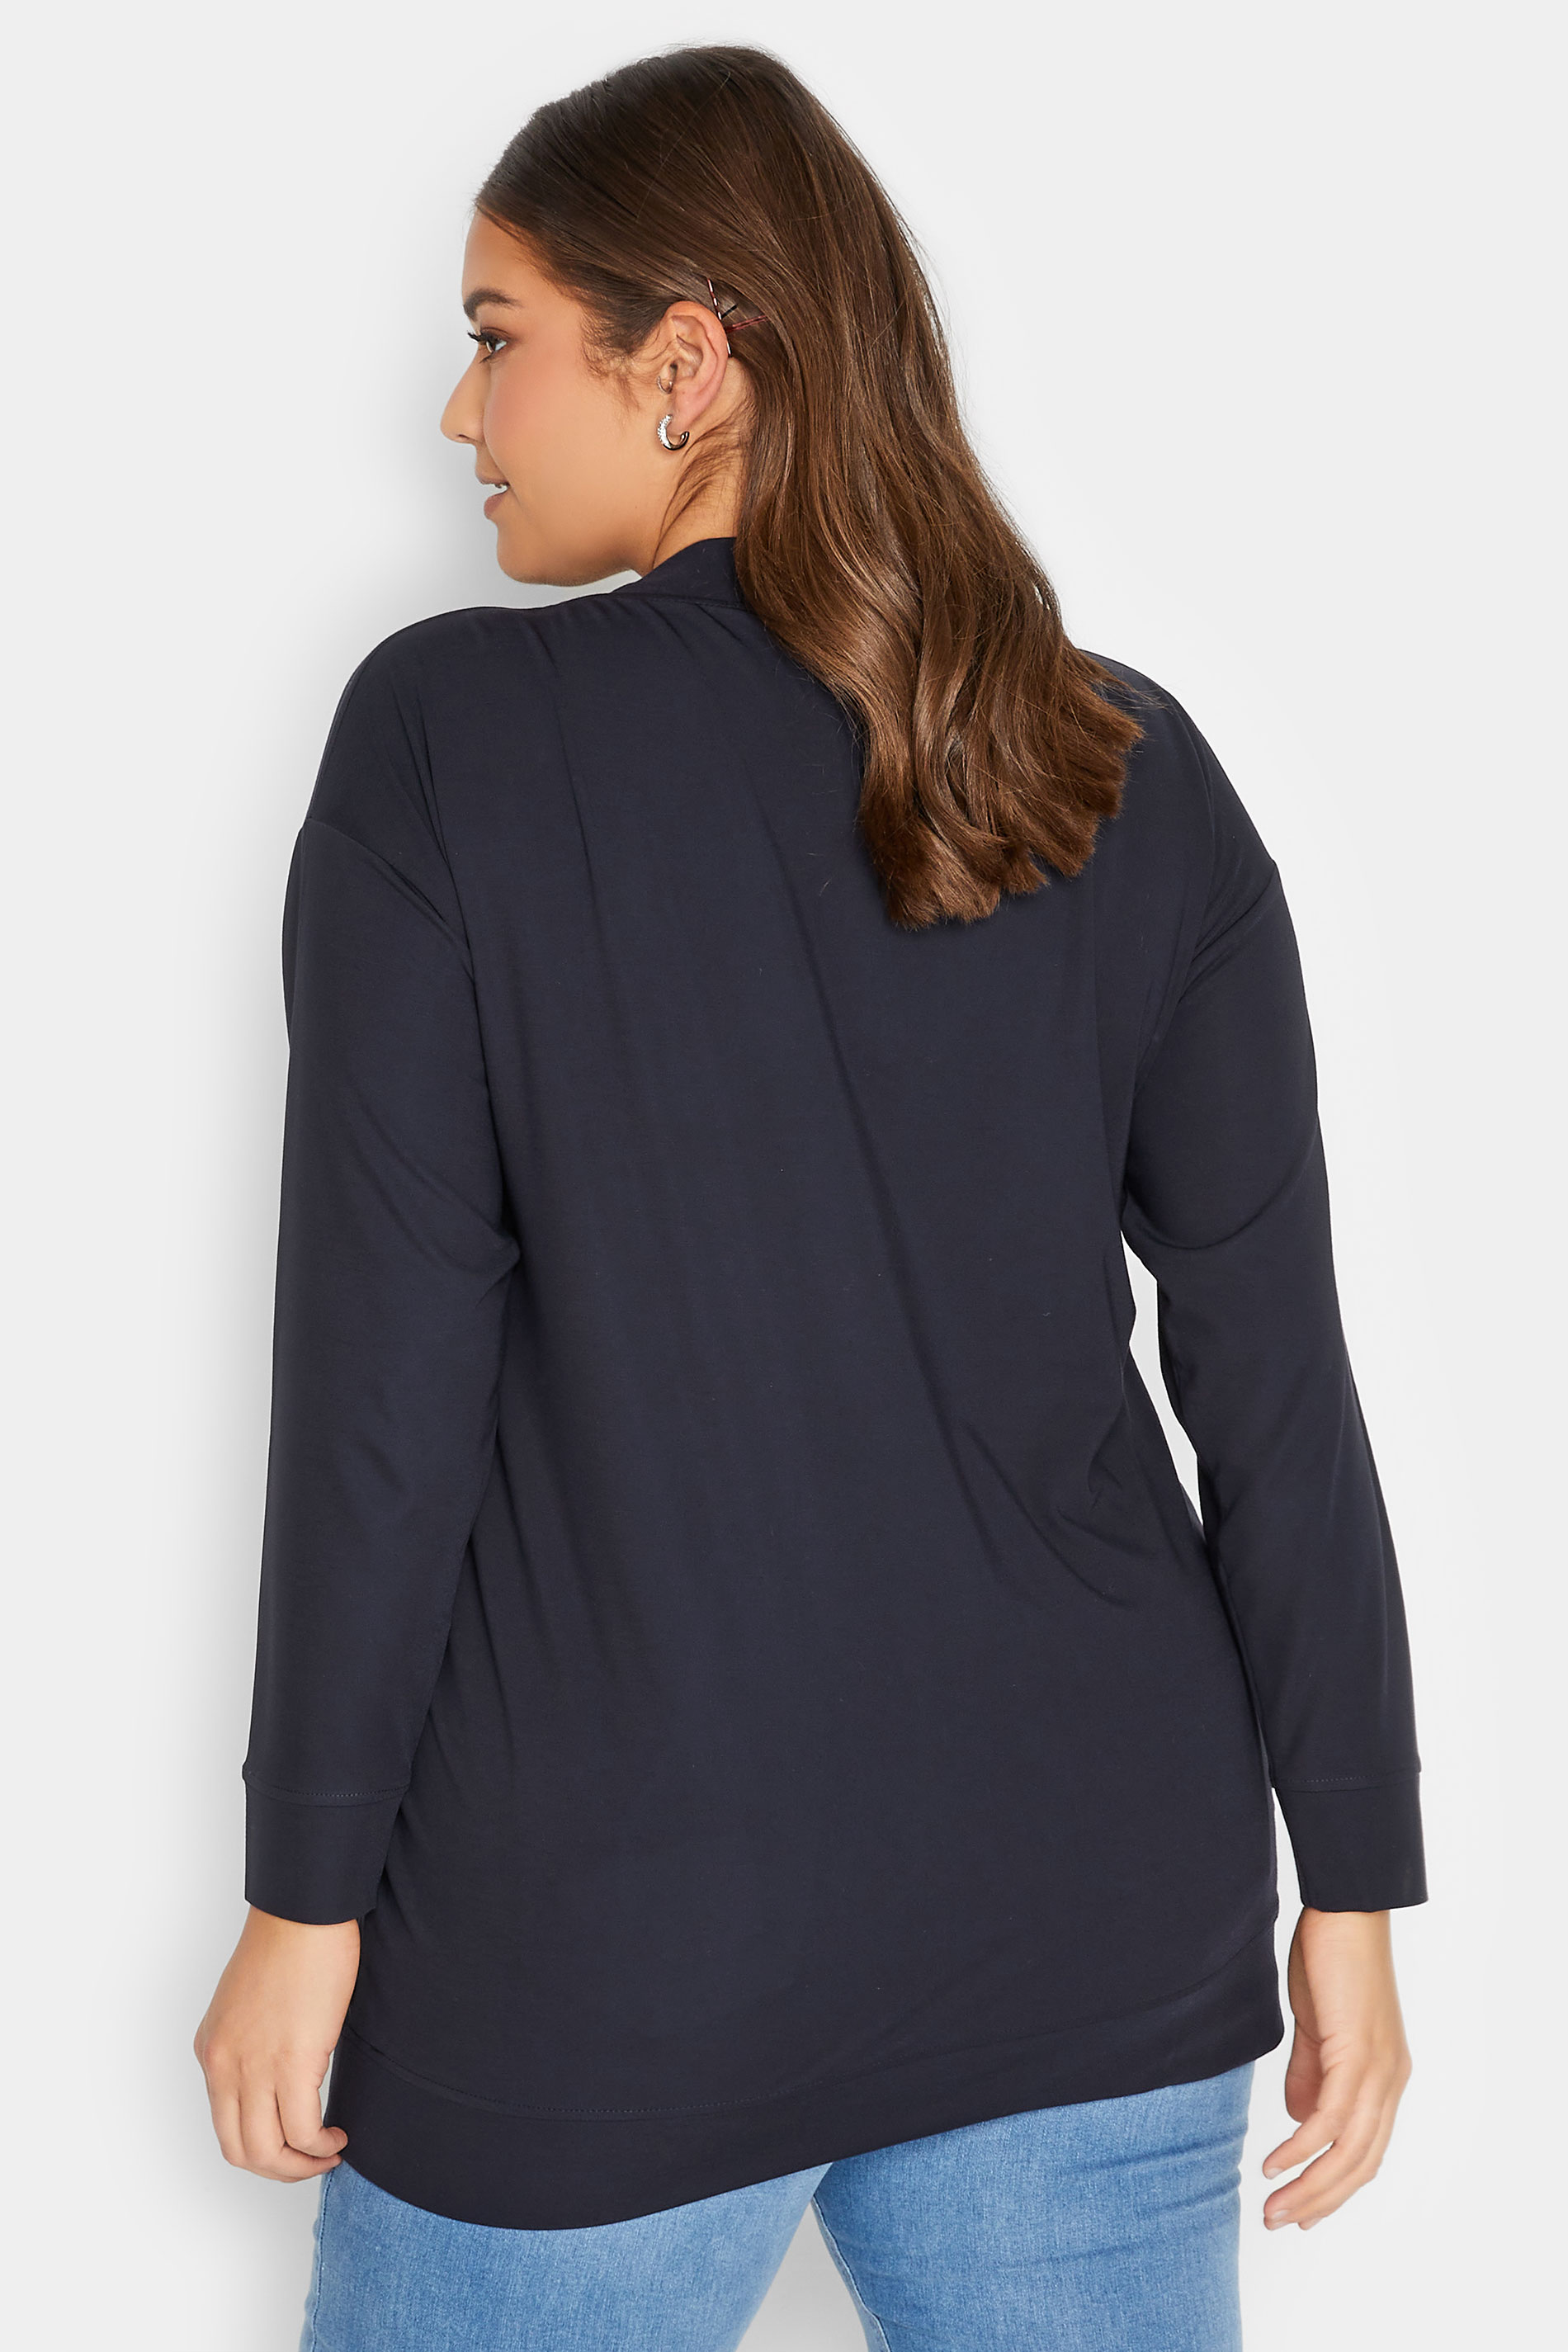 YOURS LUXURY Plus Size Navy Blue Star Embellished Sweatshirt | Yours Clothing 3